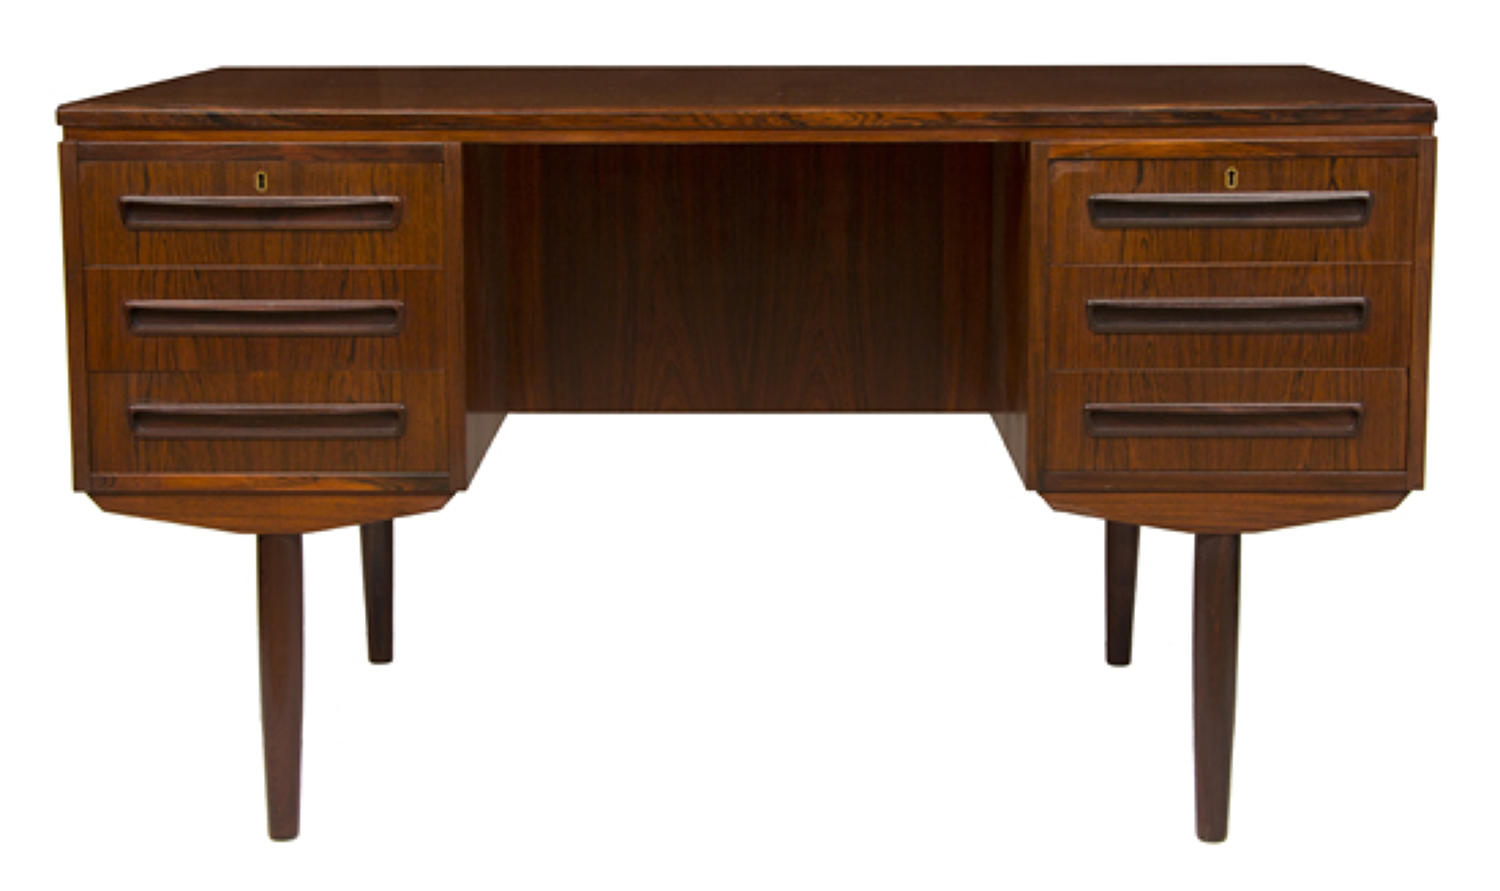 An exotic timber Danish midcentury designer desk